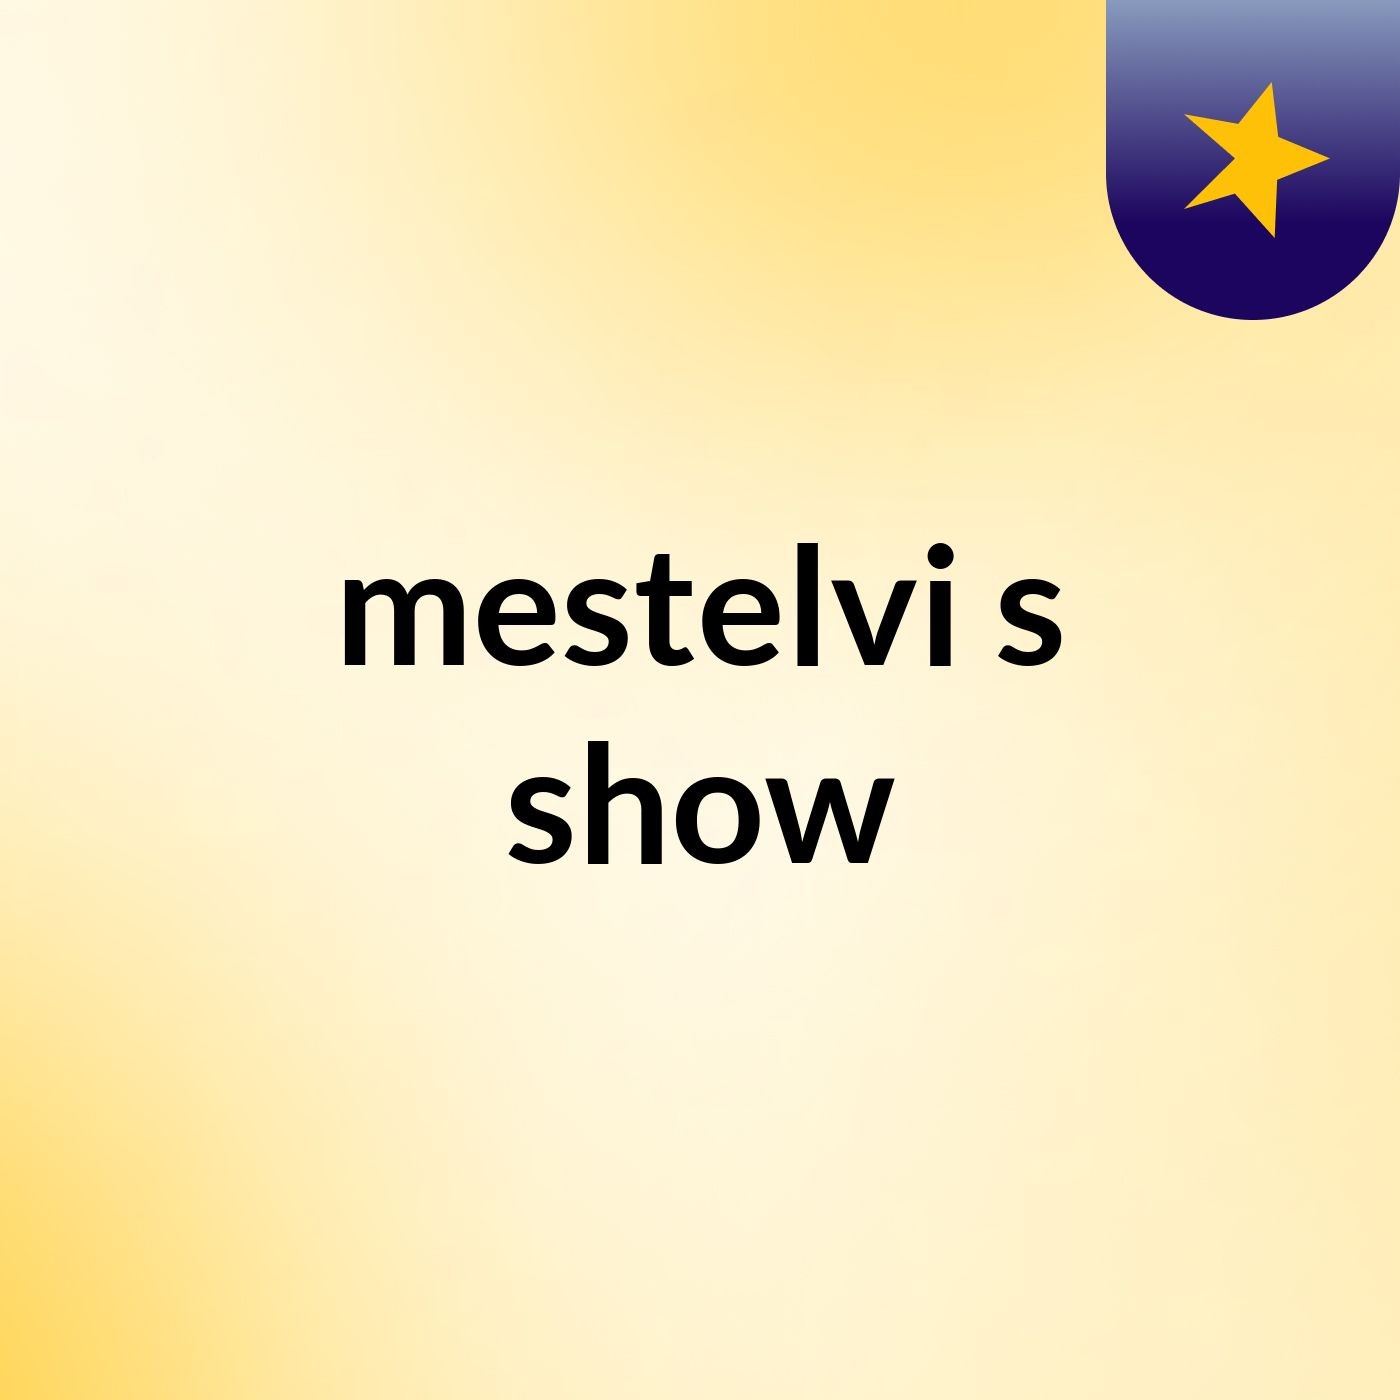 mestelvi's show